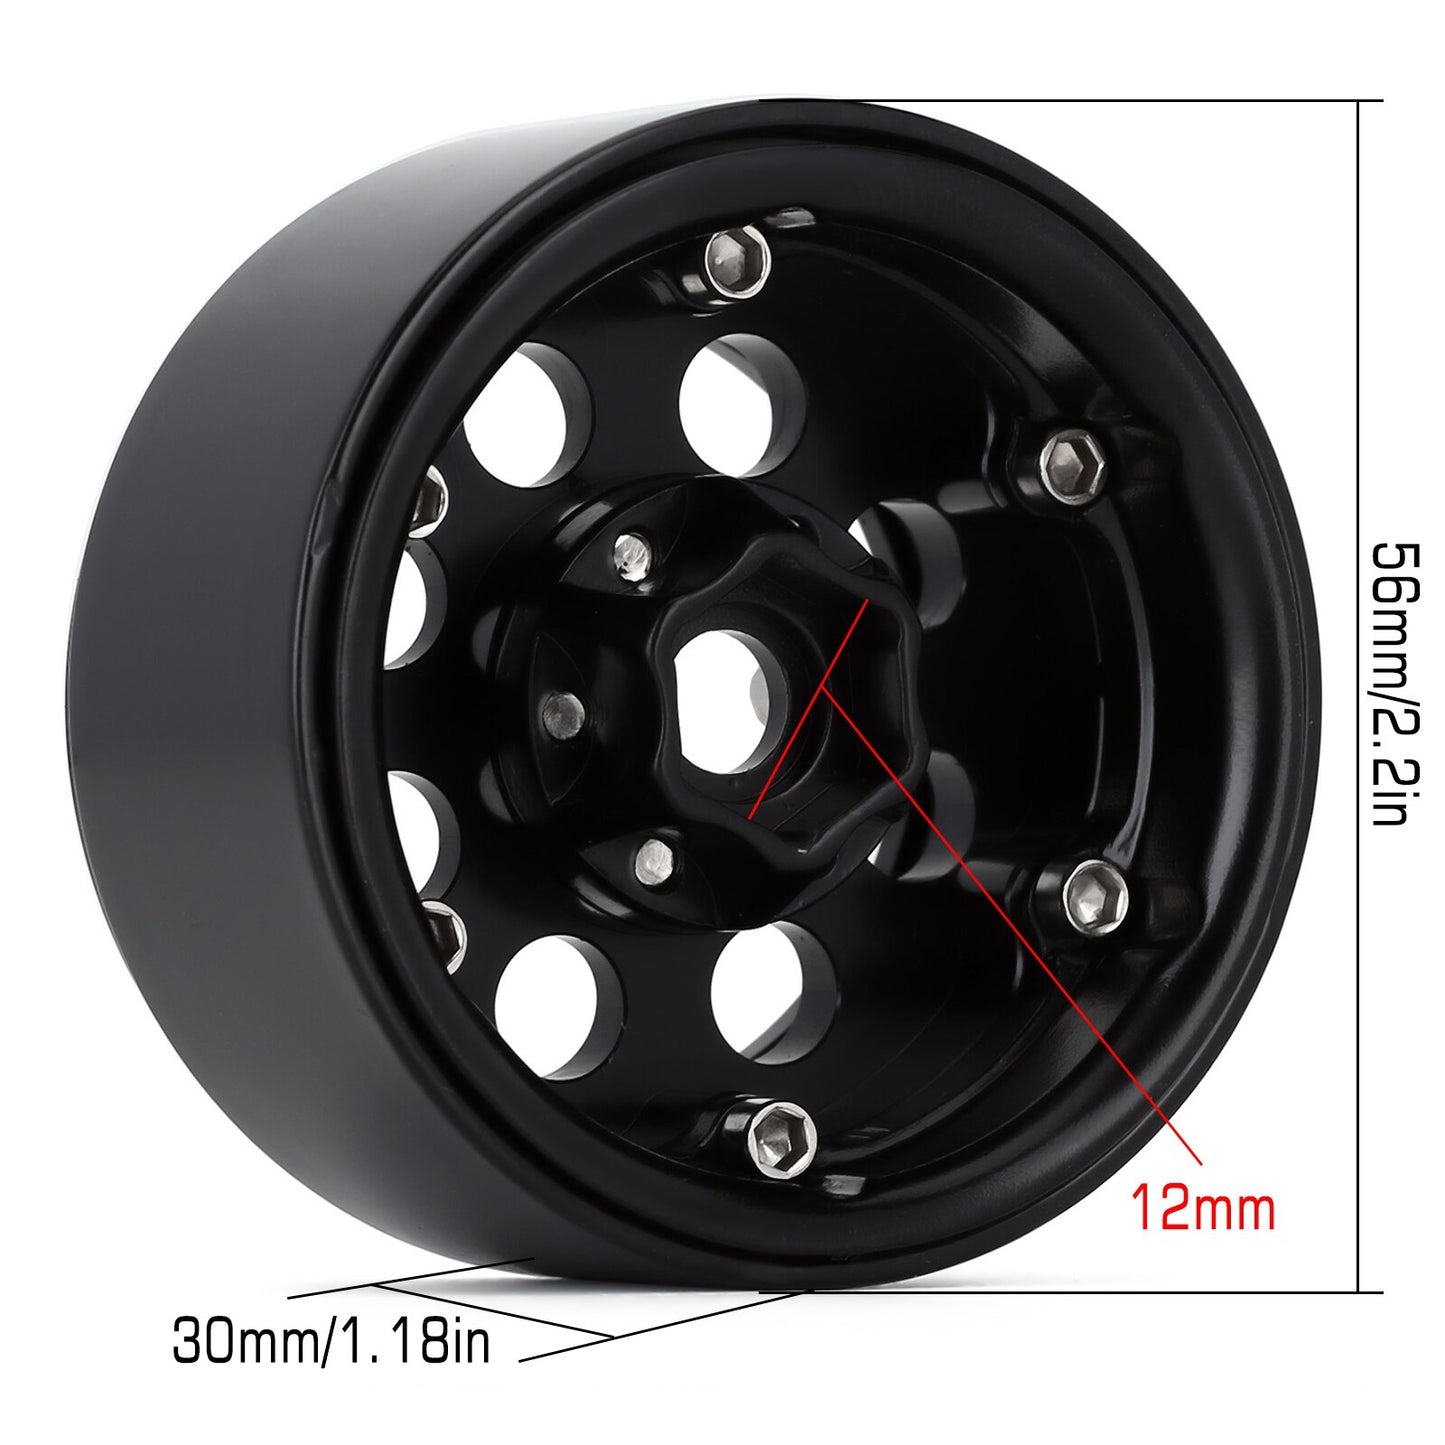 INJORA 4PCS 1.9 Metal Beadlock 8 Round Hole Wheel Hub Rim for 1/10 RC Crawler Axial SCX10 90046 AXI03007 TRX4 RedCat D90